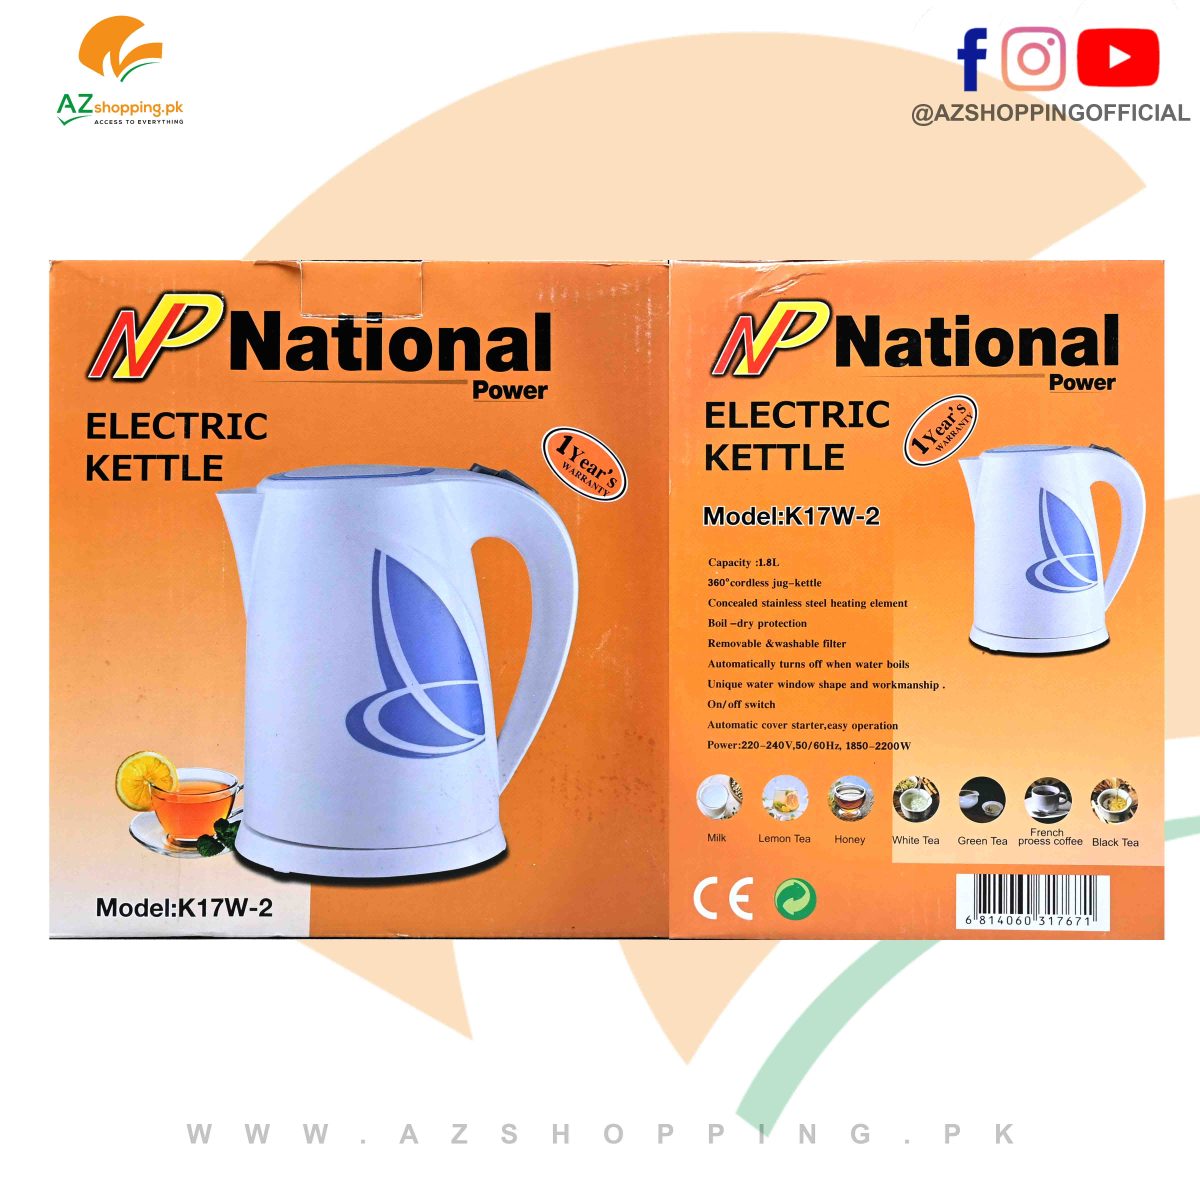 National – Electric Kettle 1850-2200W - Capacity: 1.8L - Model: K17W-2